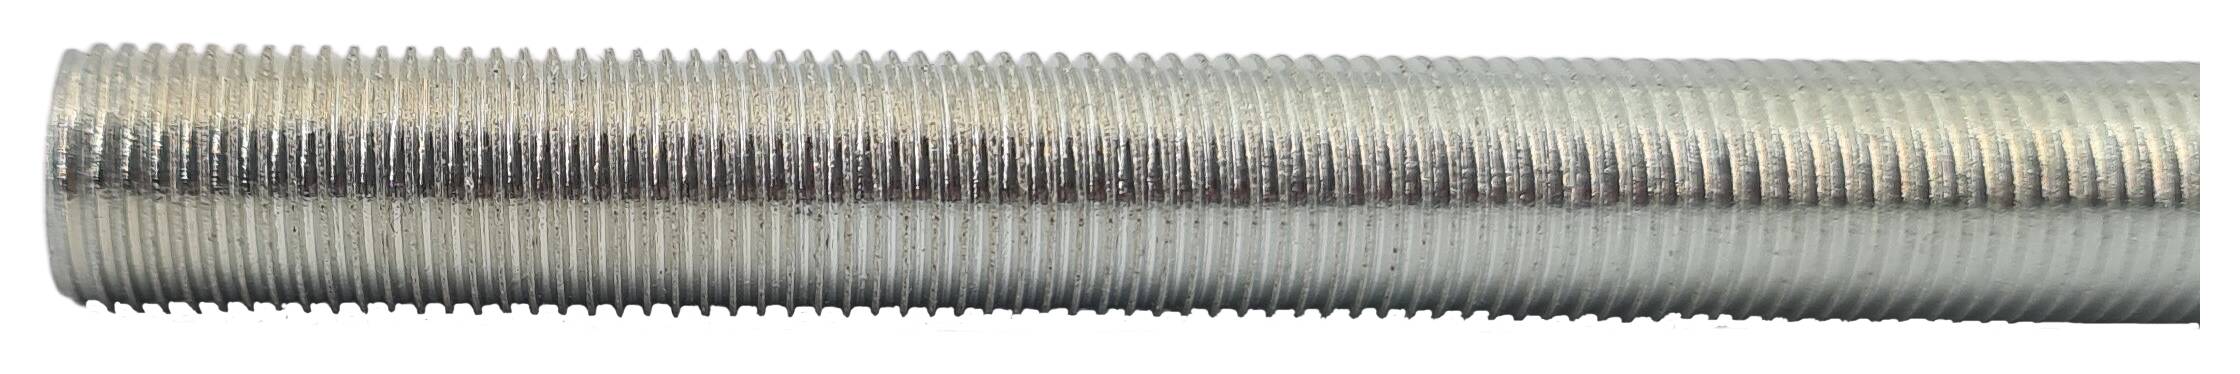 iron thread tube M10x1x240 round zinc